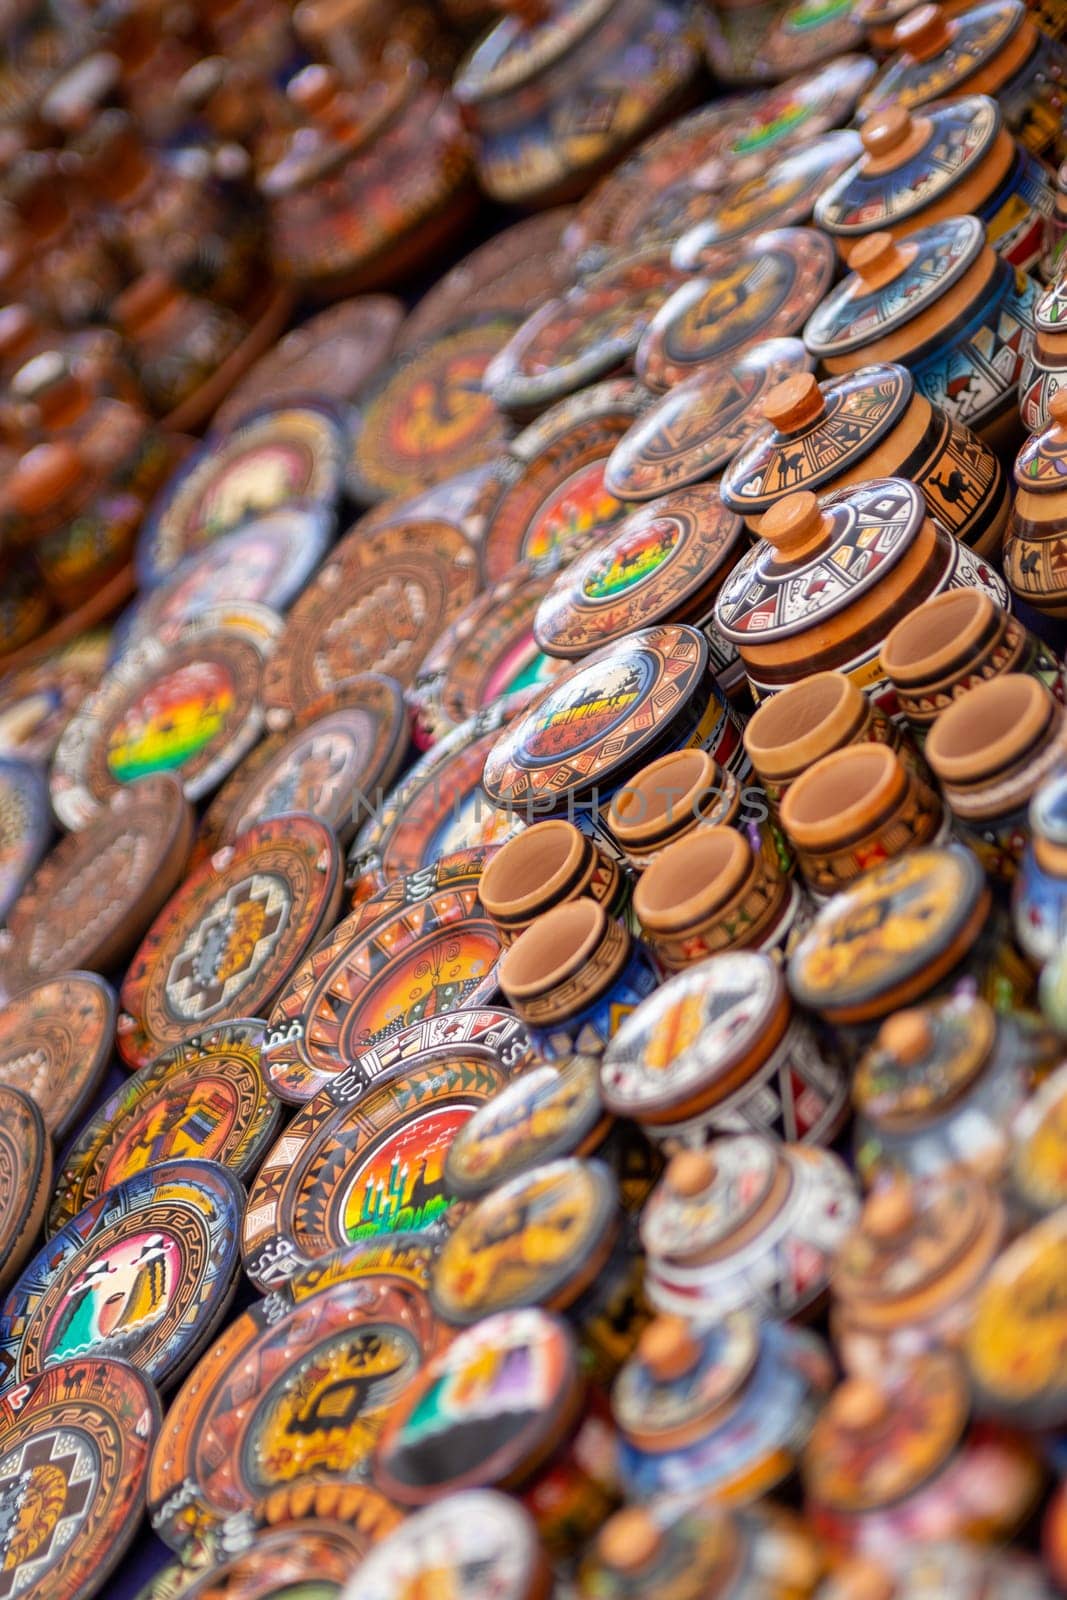 Display of Peruvian Souvenirs on display